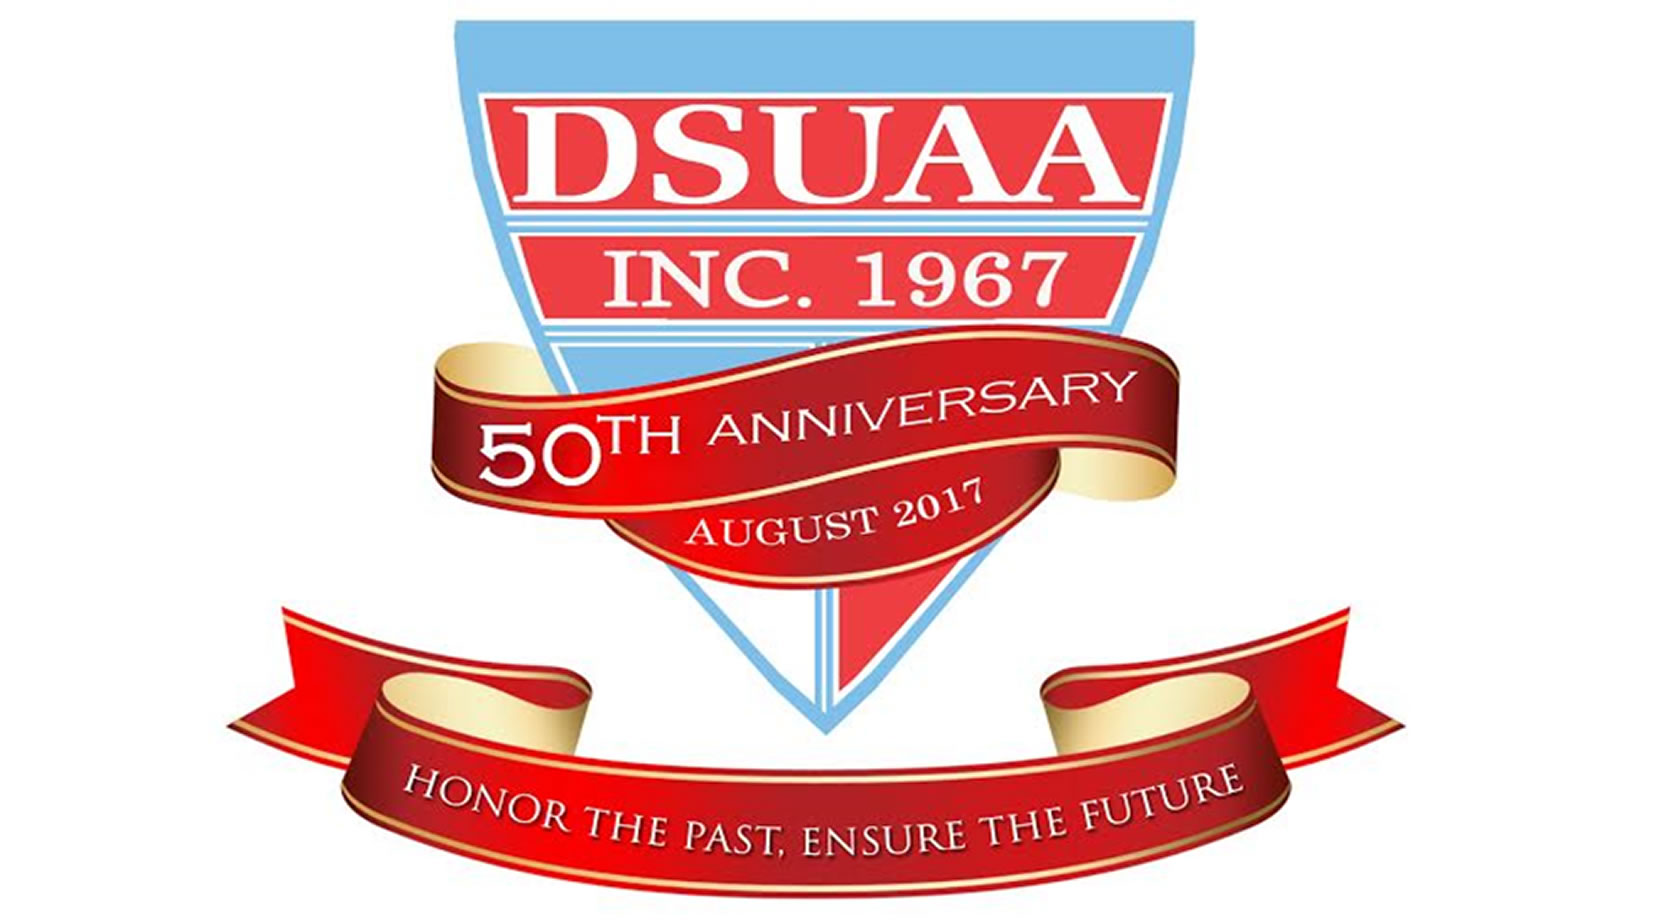 Delaware State University Alumni Association Celebrating the 50th Anniversary of the DSUAA Charter.
